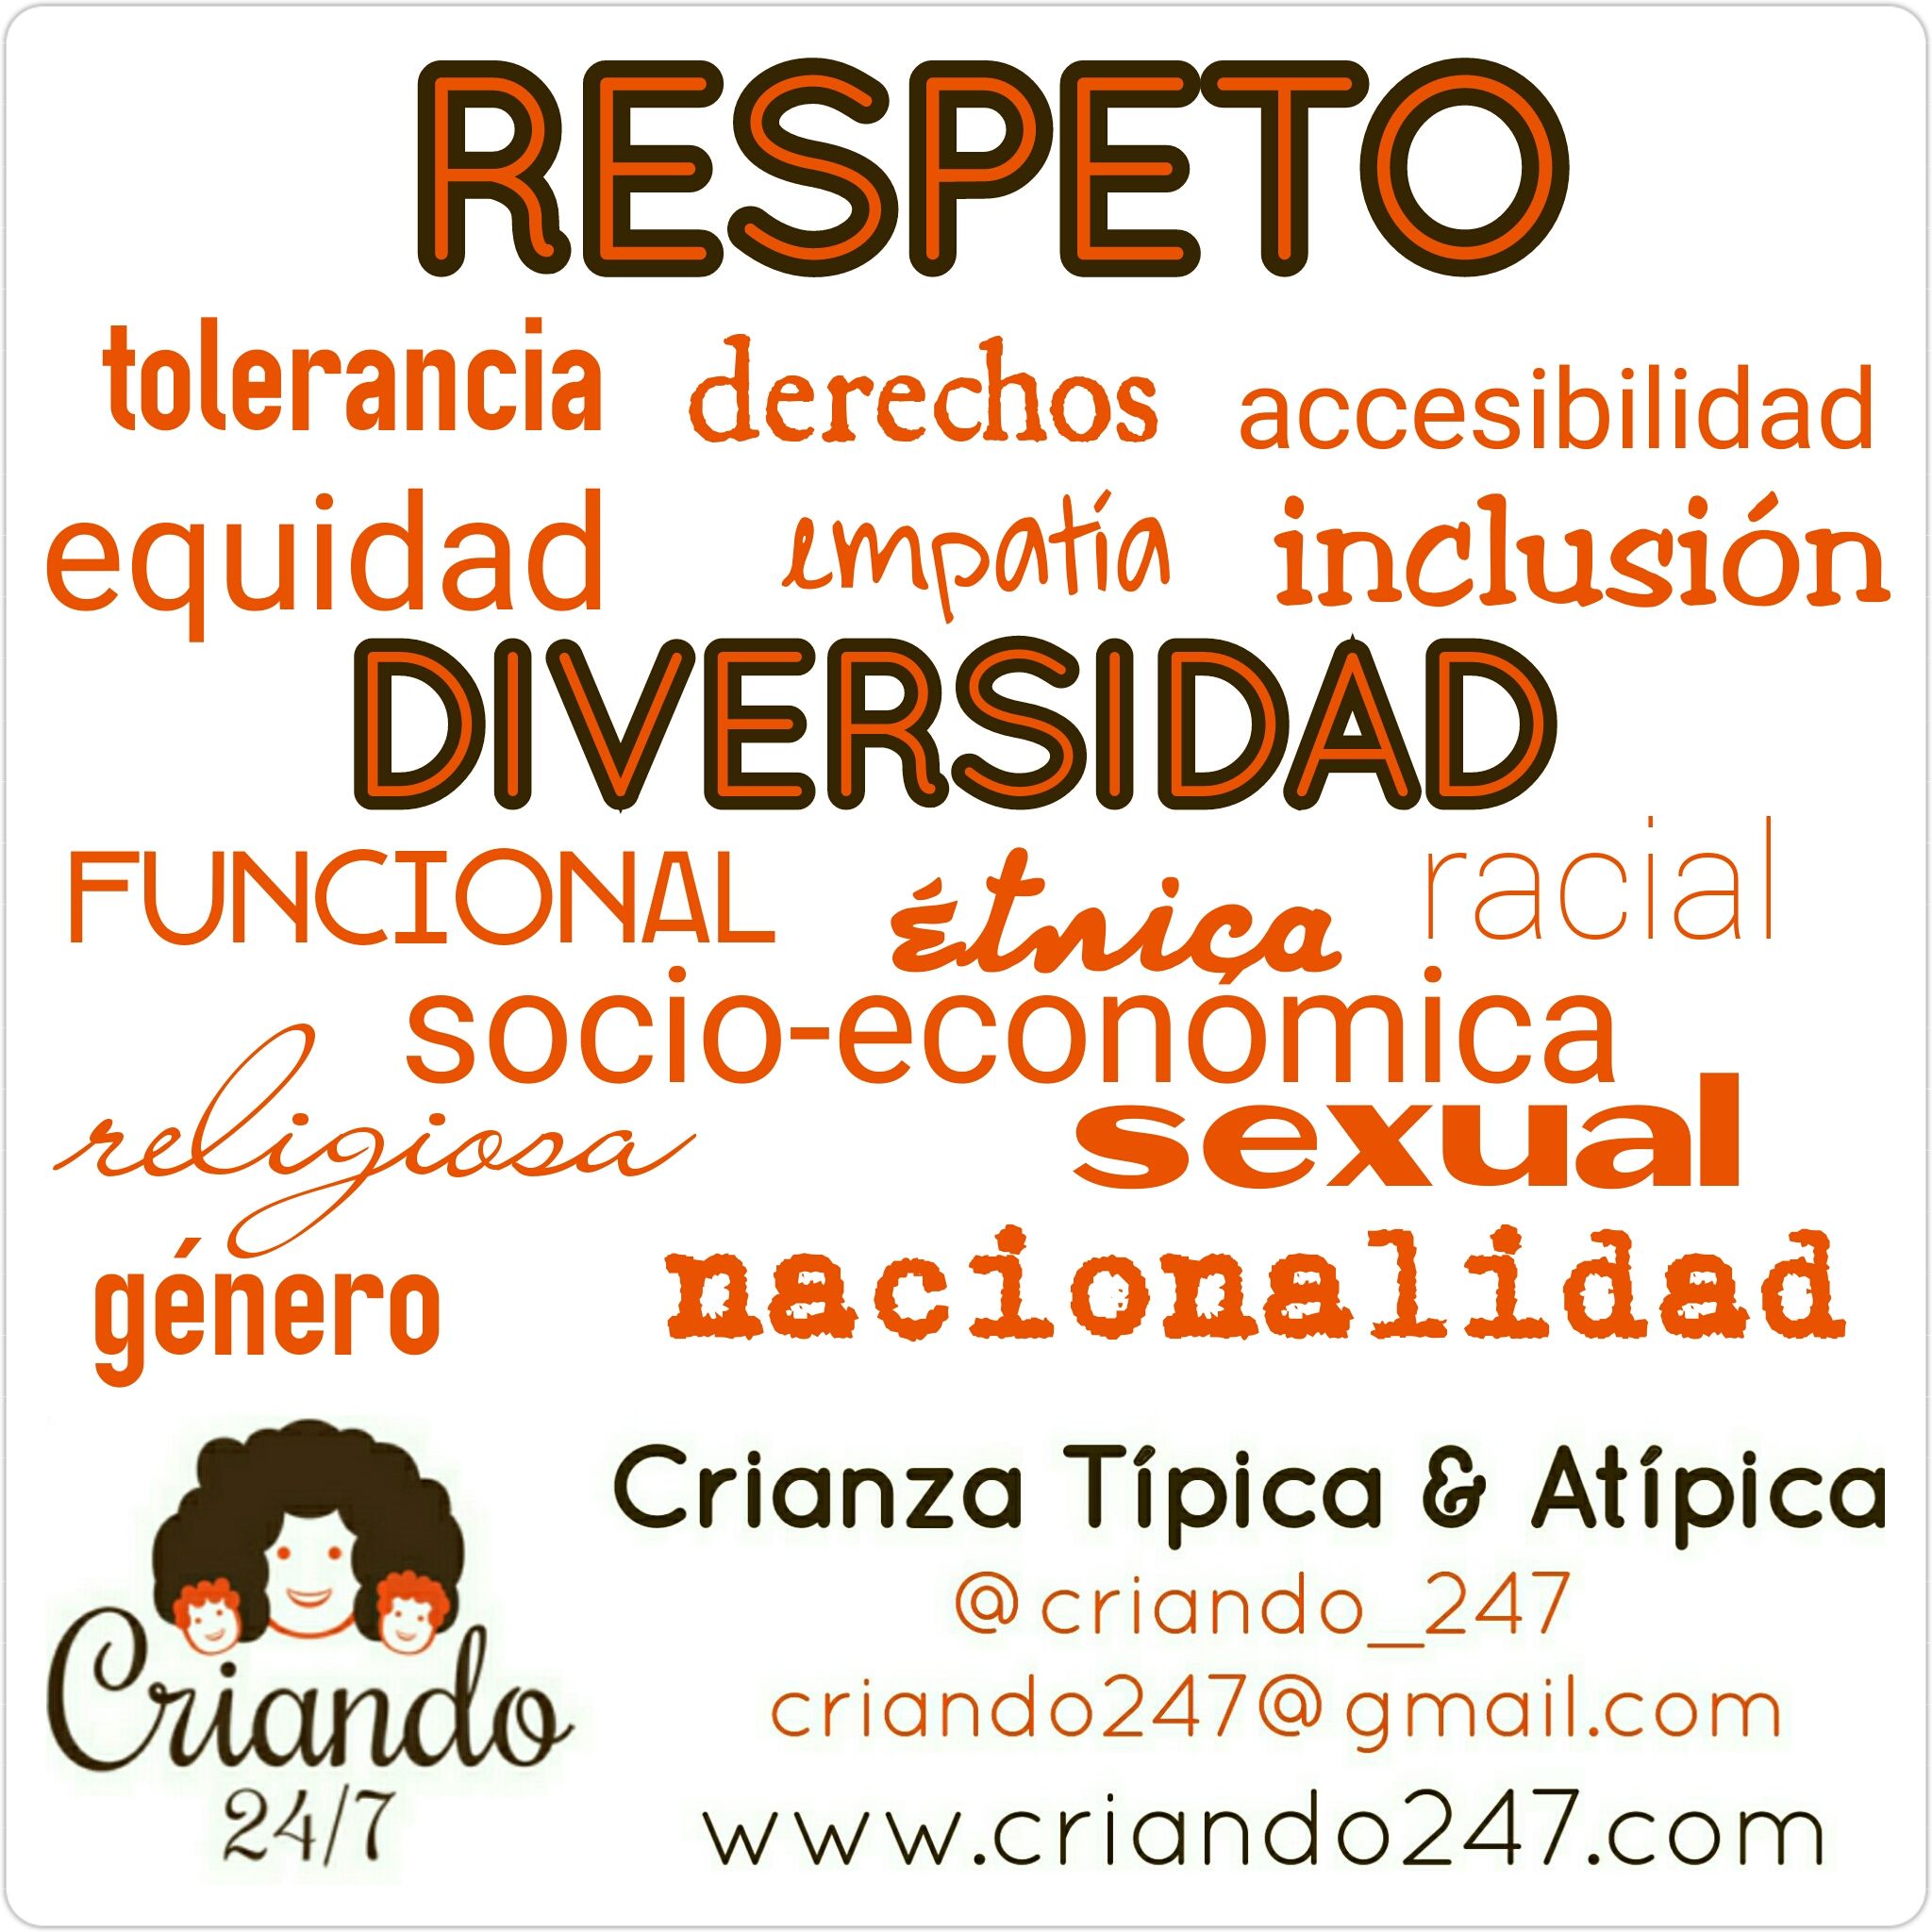 Criando247 Respeto Diversidad